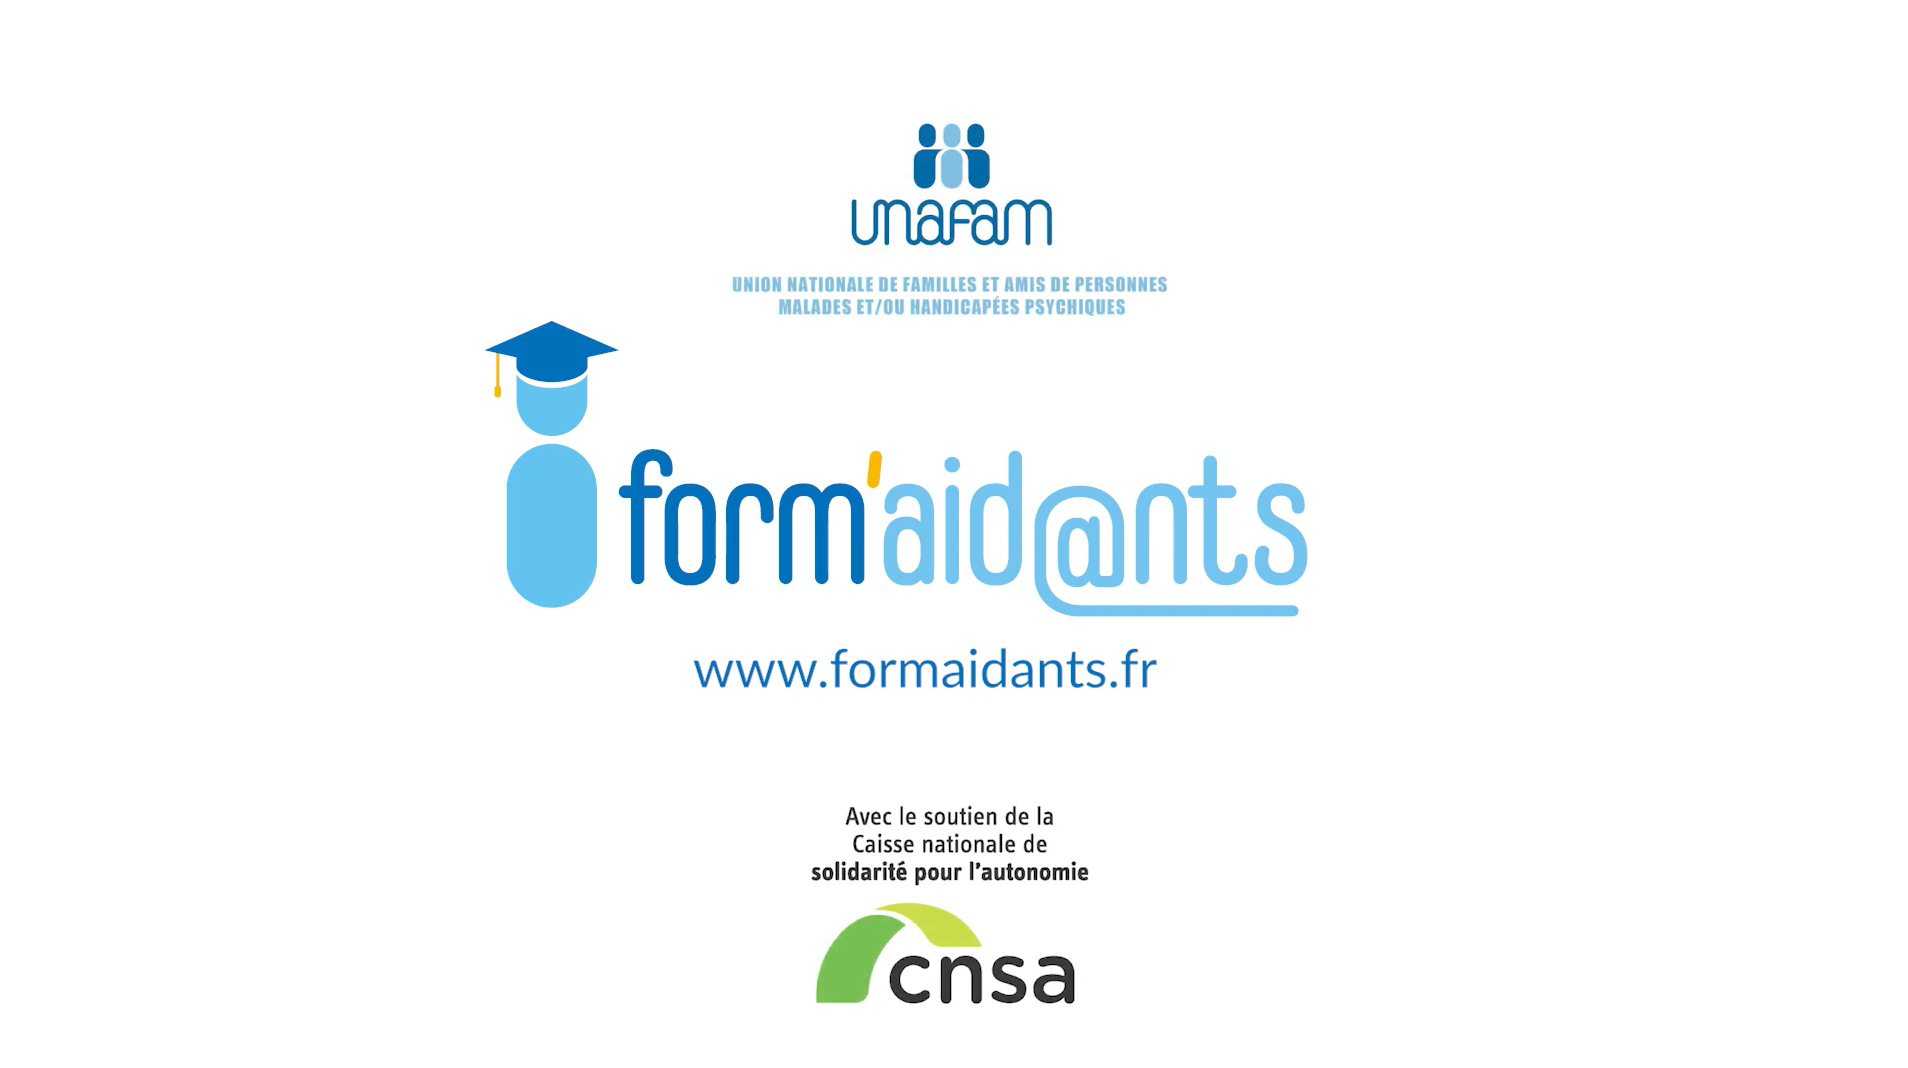 Visuel Unafam : Formaidants.fr ; avec le soutien de la CNSA